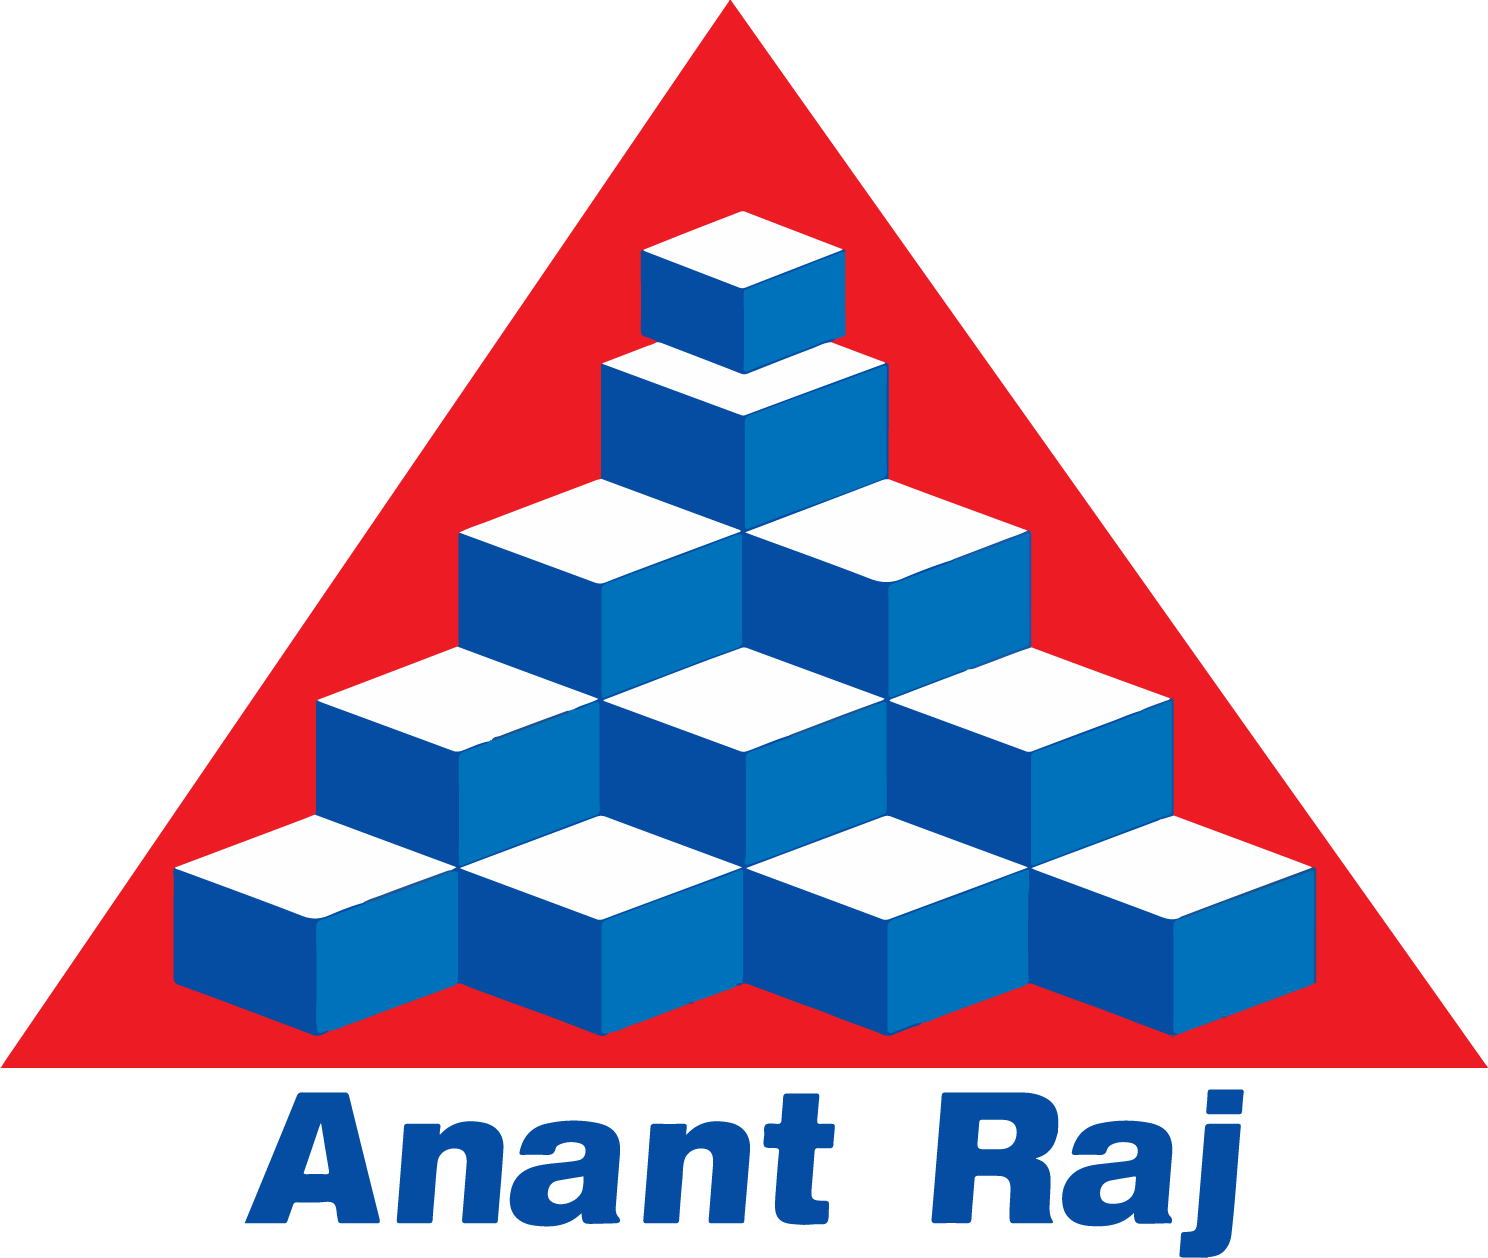 Anant Raj logo large (transparent PNG)